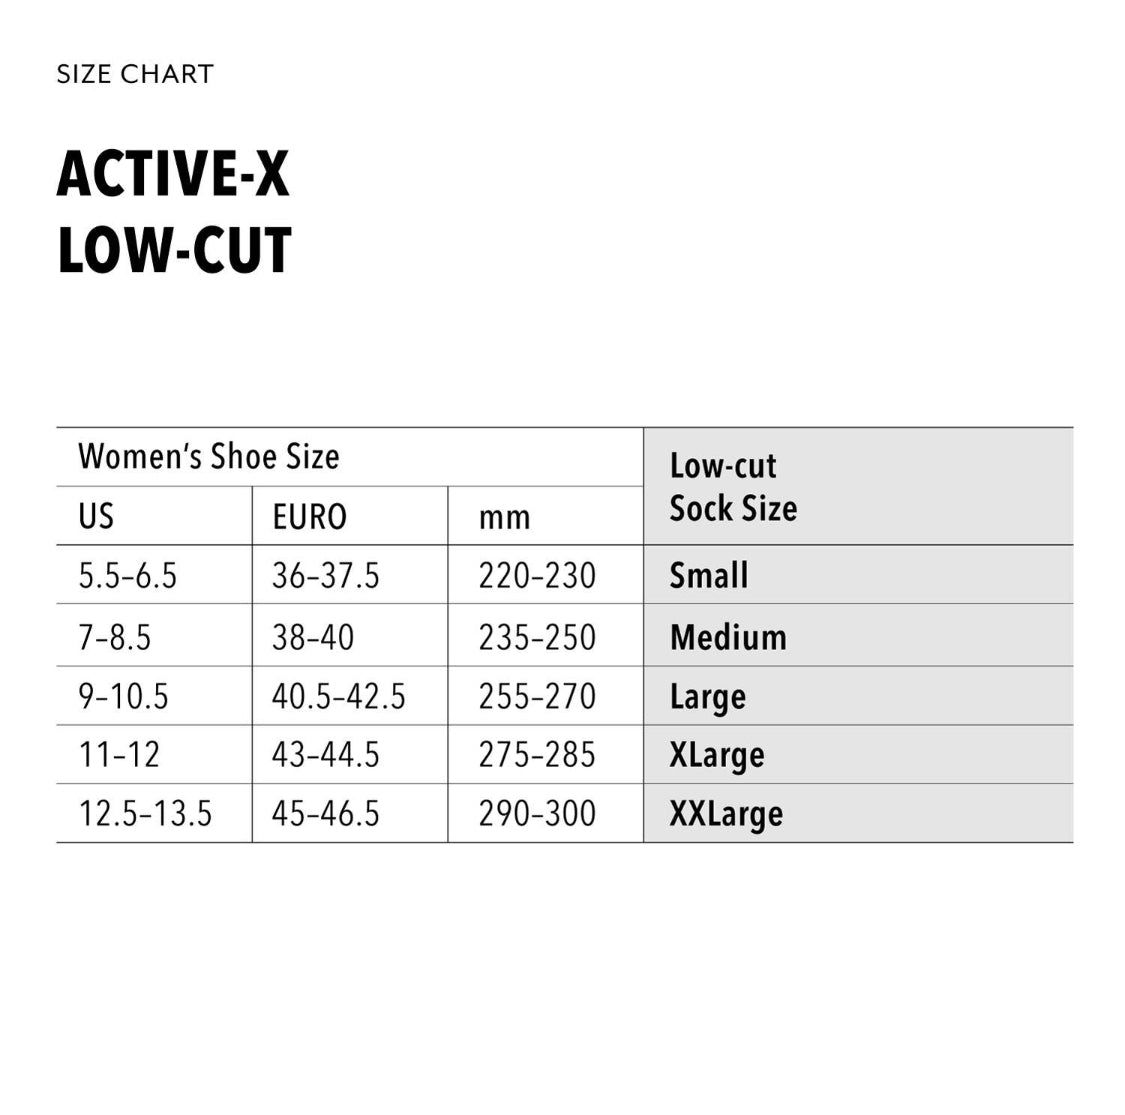 Active-X Low-Cut socks